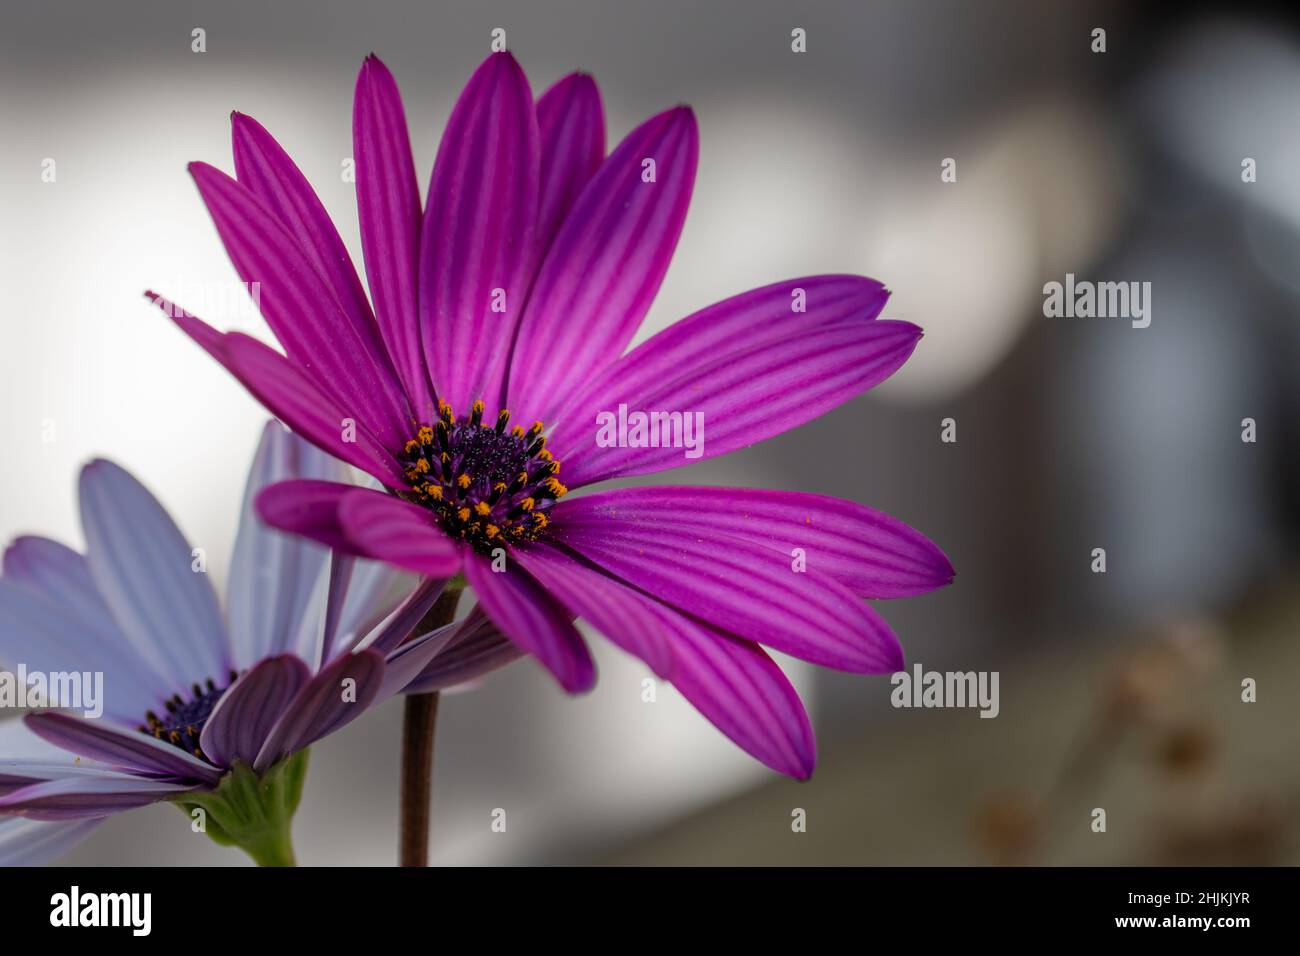 Fondo de pantalla alegre fotografías e imágenes de alta resolución - Alamy